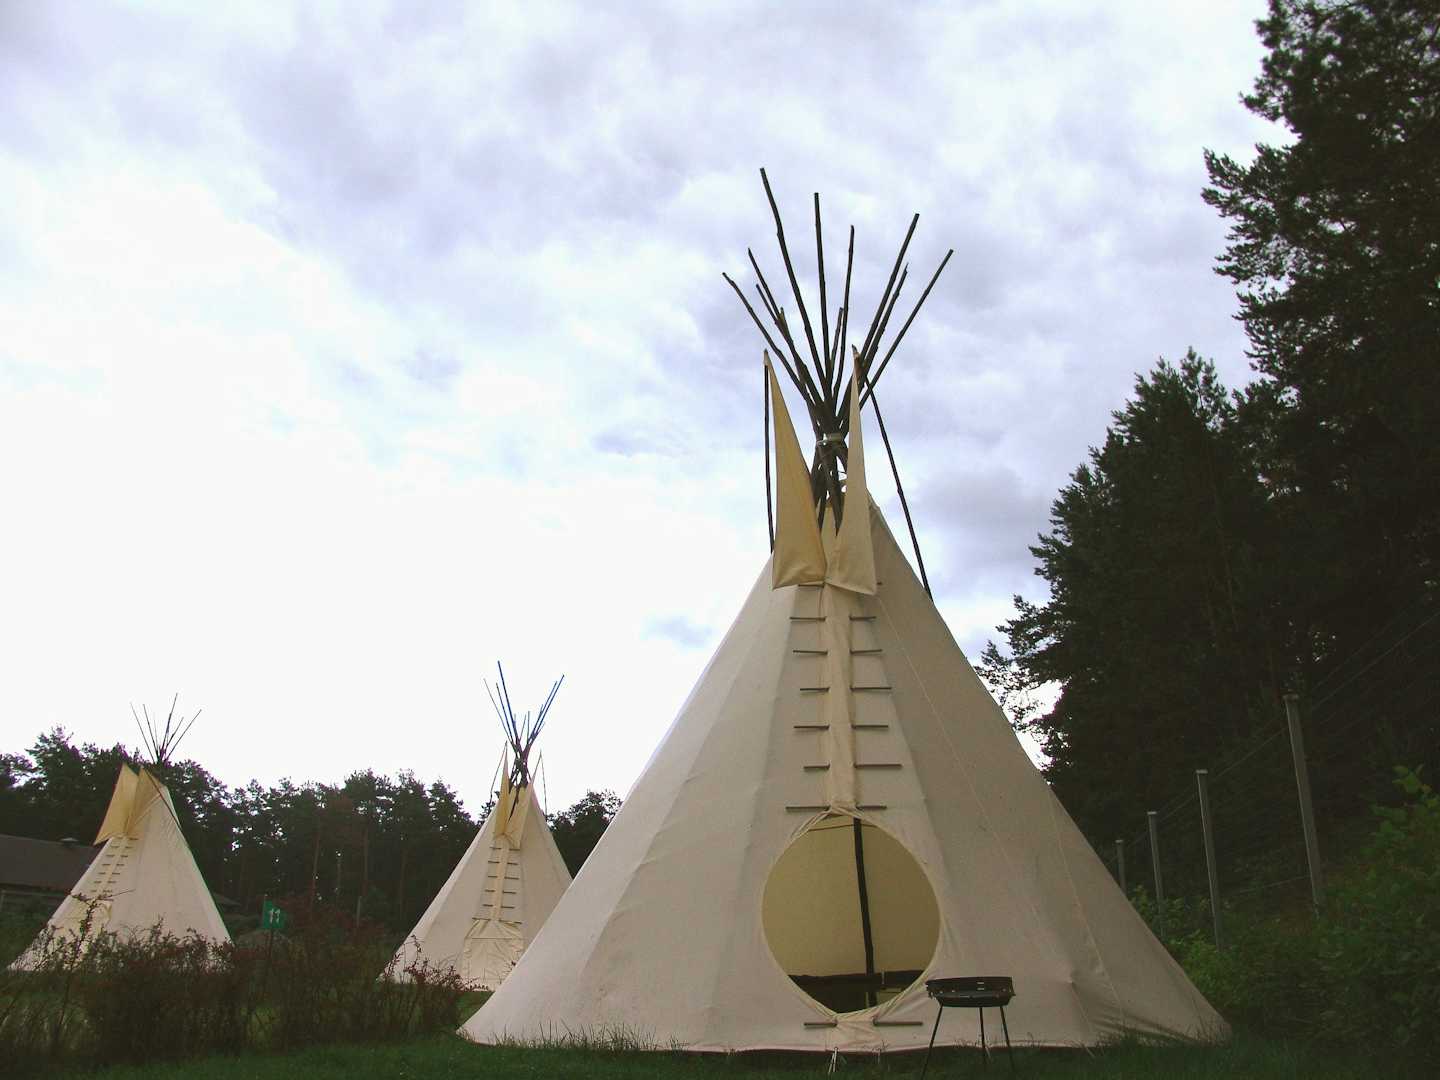 Druskininkai Camping - Tipi Zelte auf dem Campingplatz